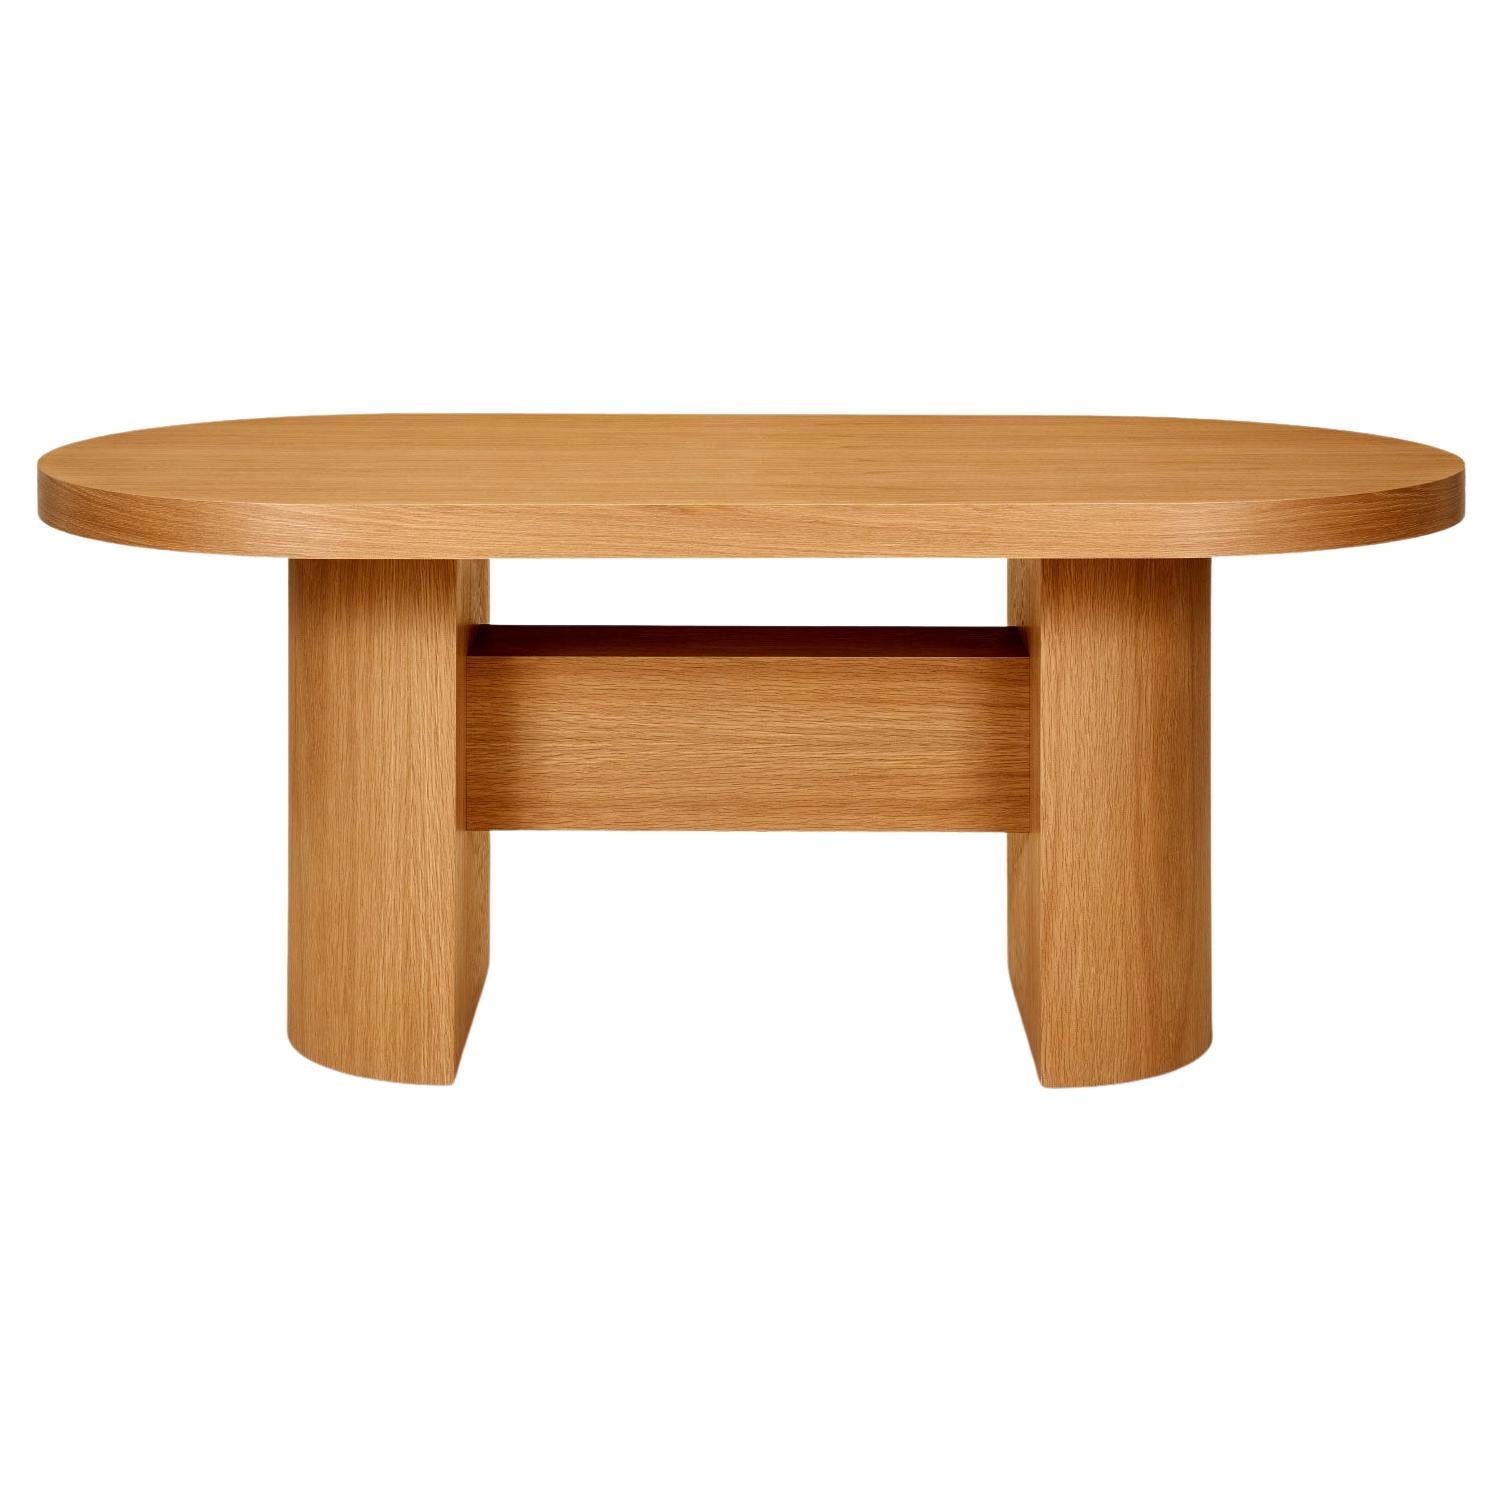 Belmont modern Dining Table in White Oak wood veneer 